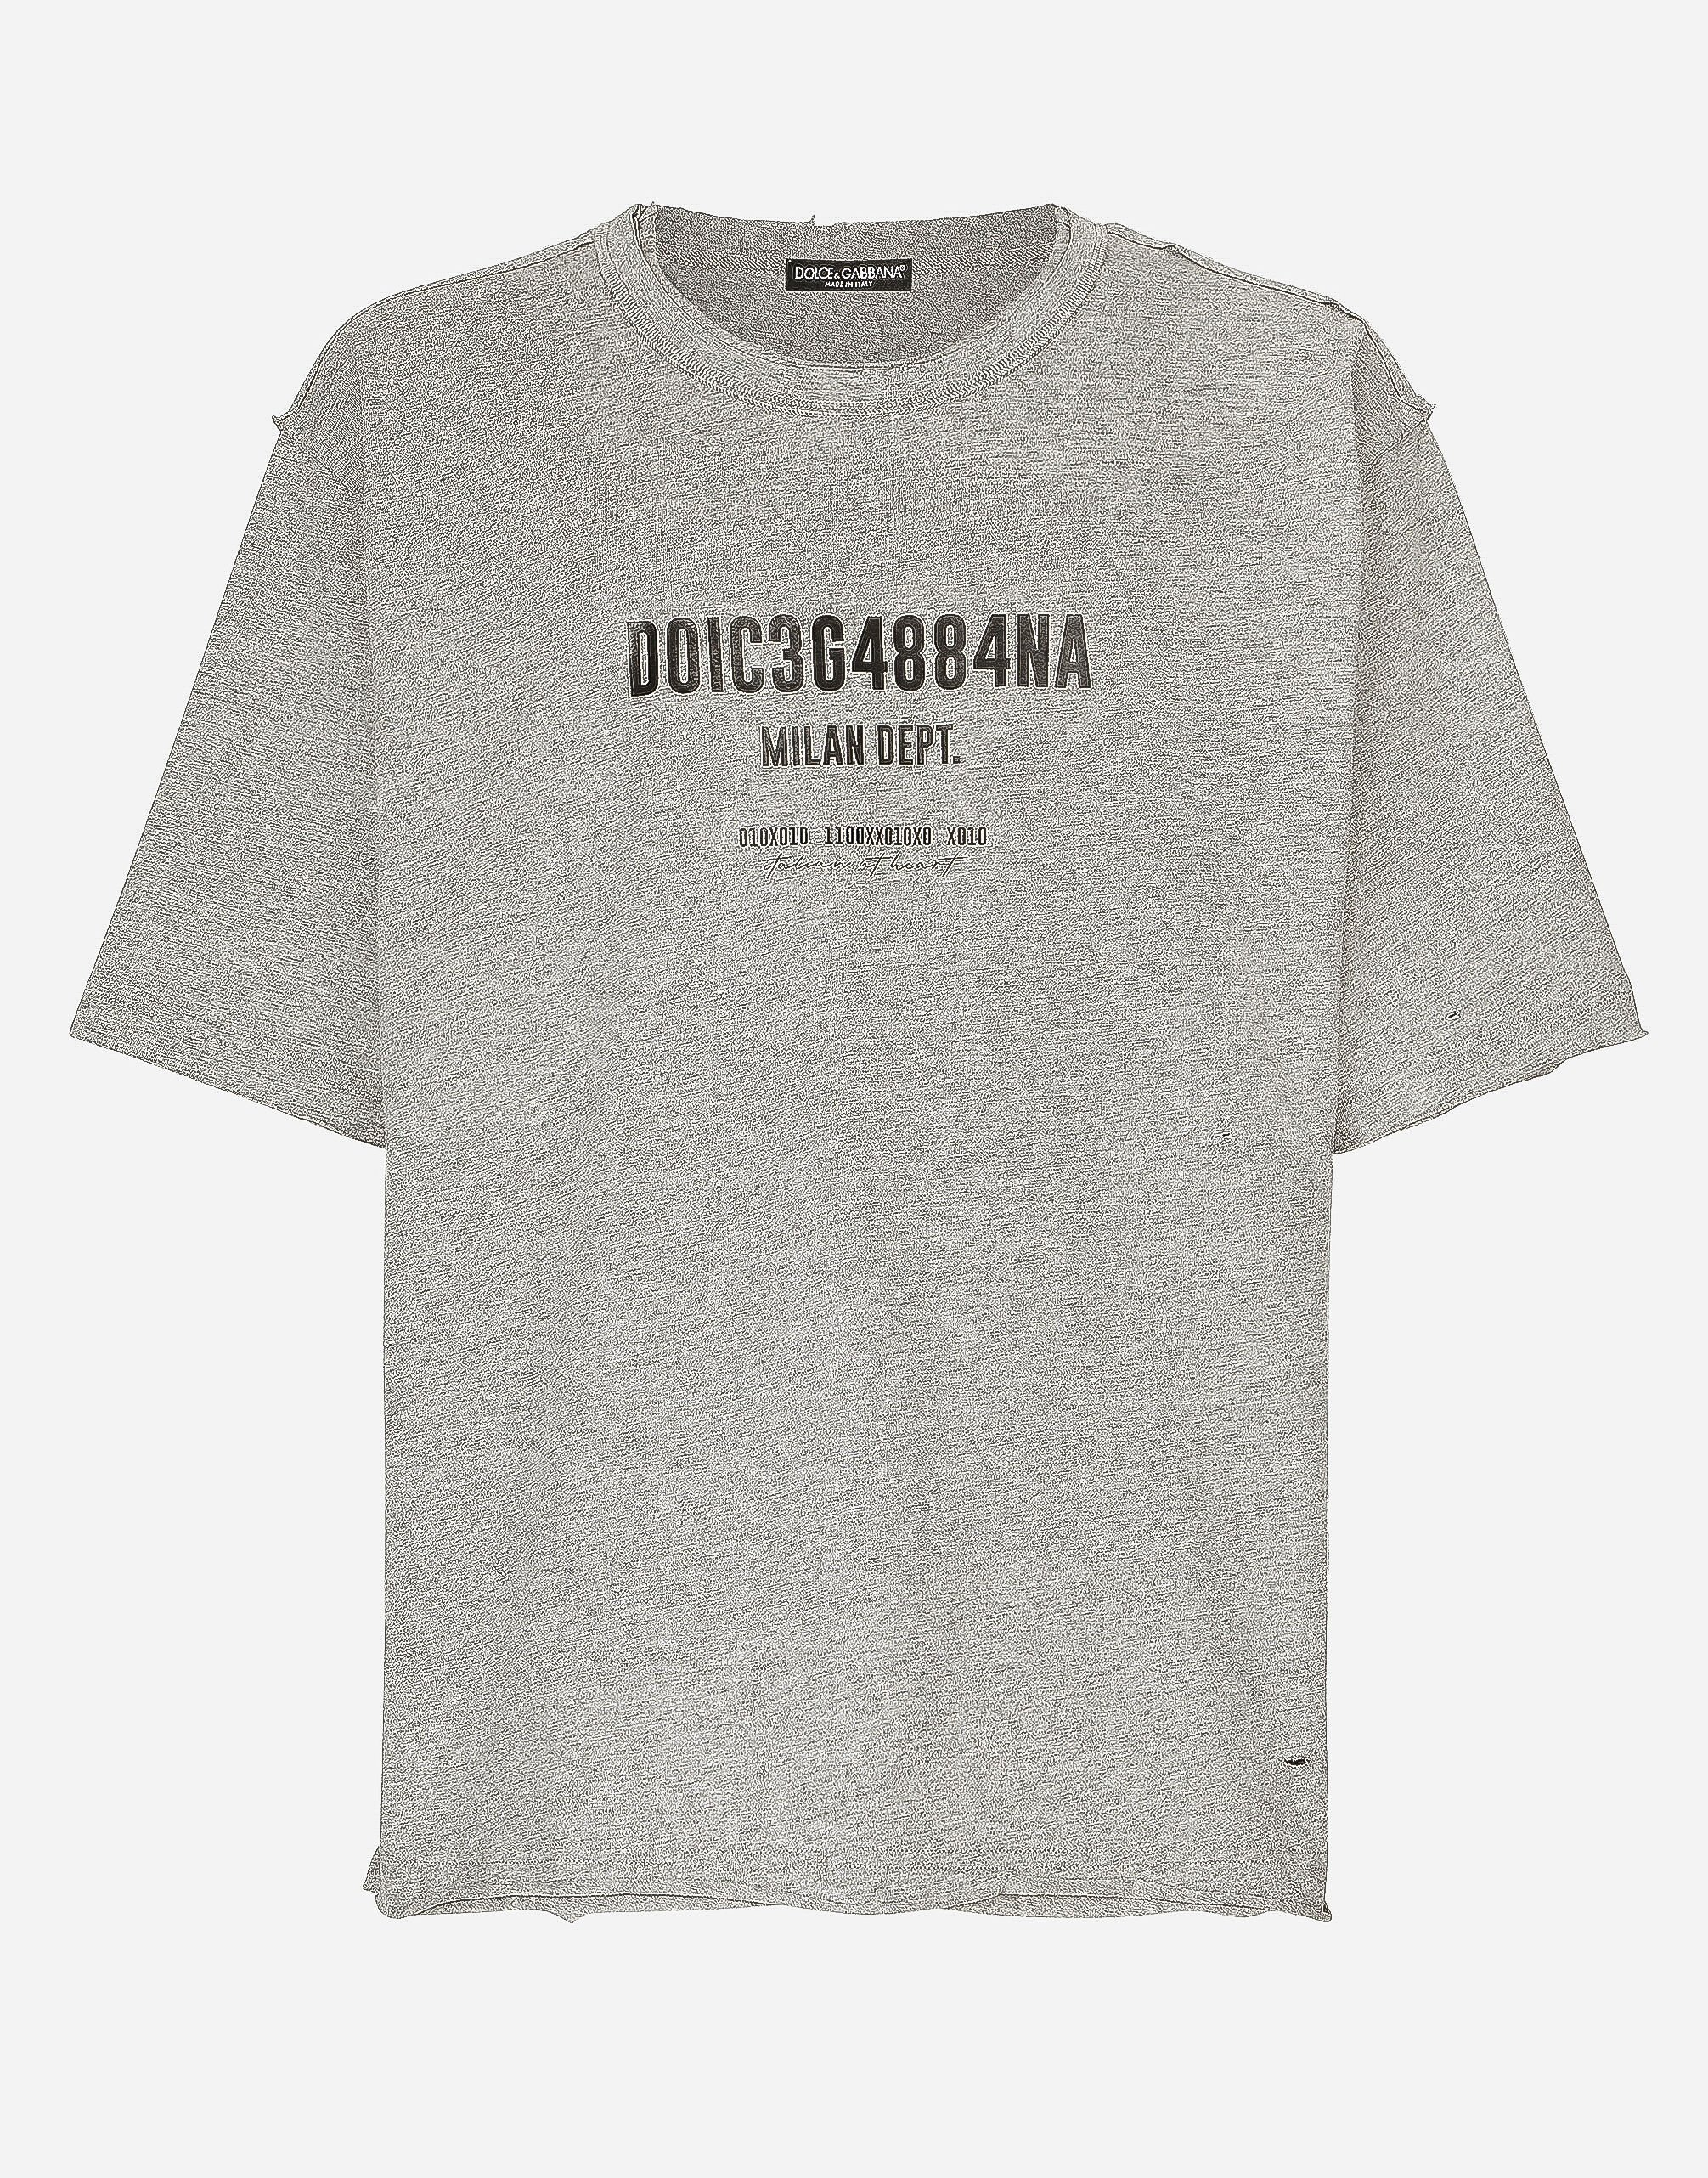 Dolce&Gabbana T-shirt cotone interlock con stampa logo Nero G710PTFU26Z